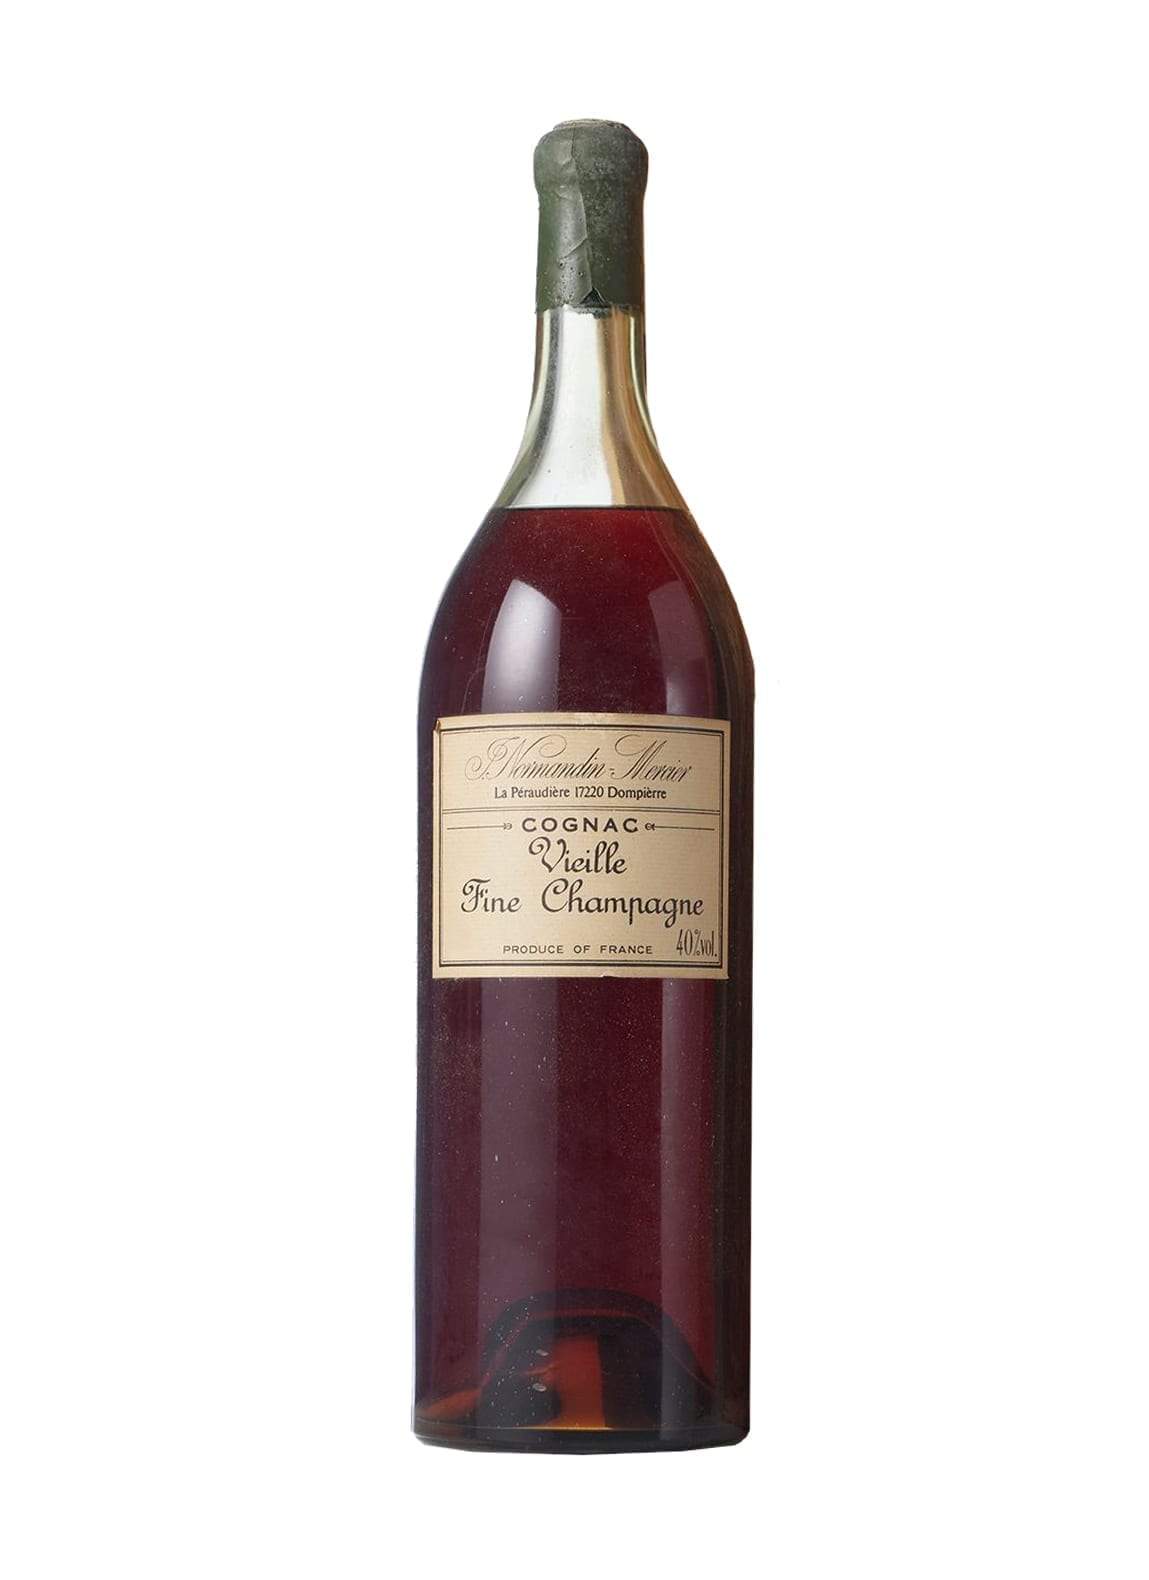 Normandin-Mercier Cognac 15 years Vieille Fine Champagne Magnum 40% 1500ml | Brandy | Shop online at Spirits of France